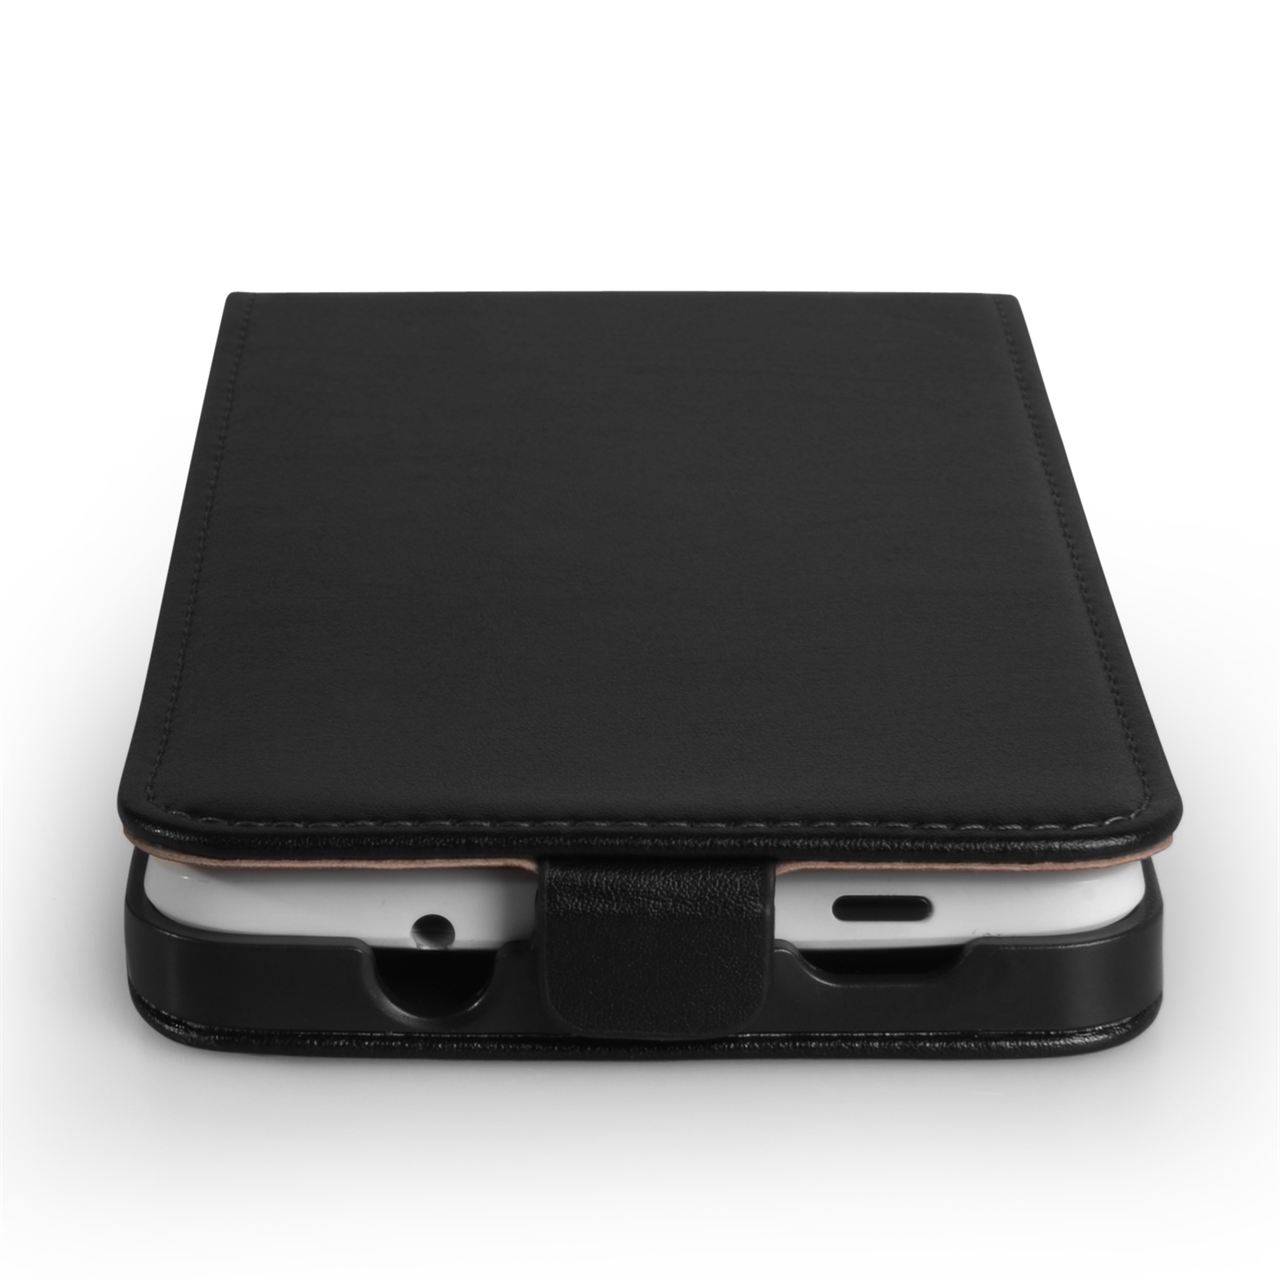 Caseflex HTC One Max Real Leather Flip Case - Black